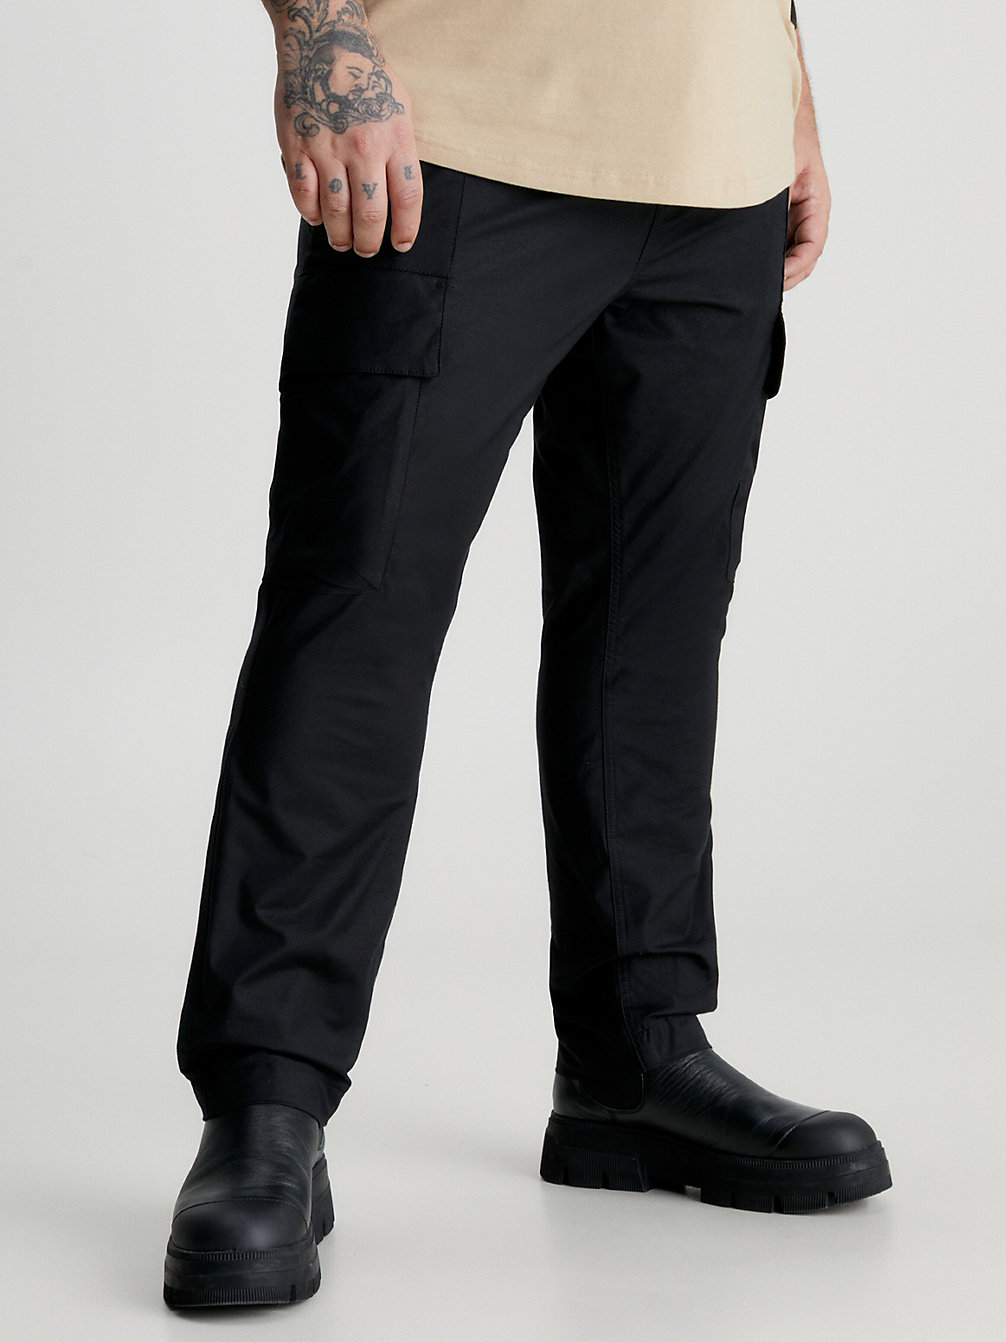 CK BLACK Pantalon Cargo Skinny Grande Taille undefined hommes Calvin Klein